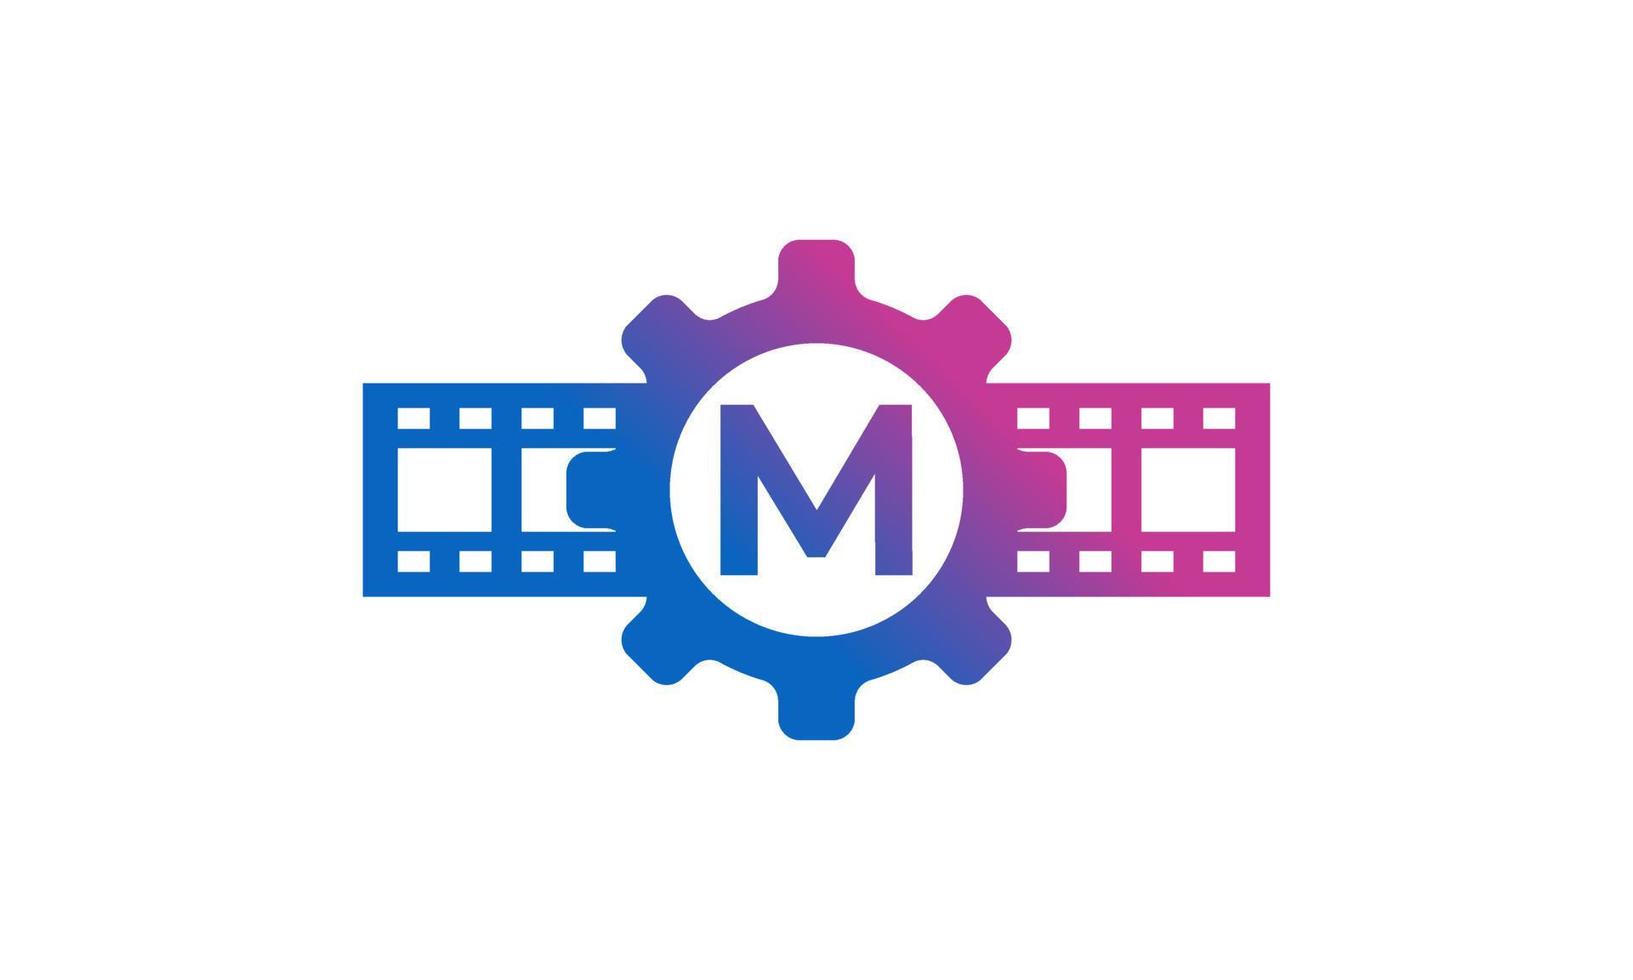 letra inicial m engranaje rueda dentada con rayas de carrete tira de película para película cine producción estudio logotipo inspiración vector